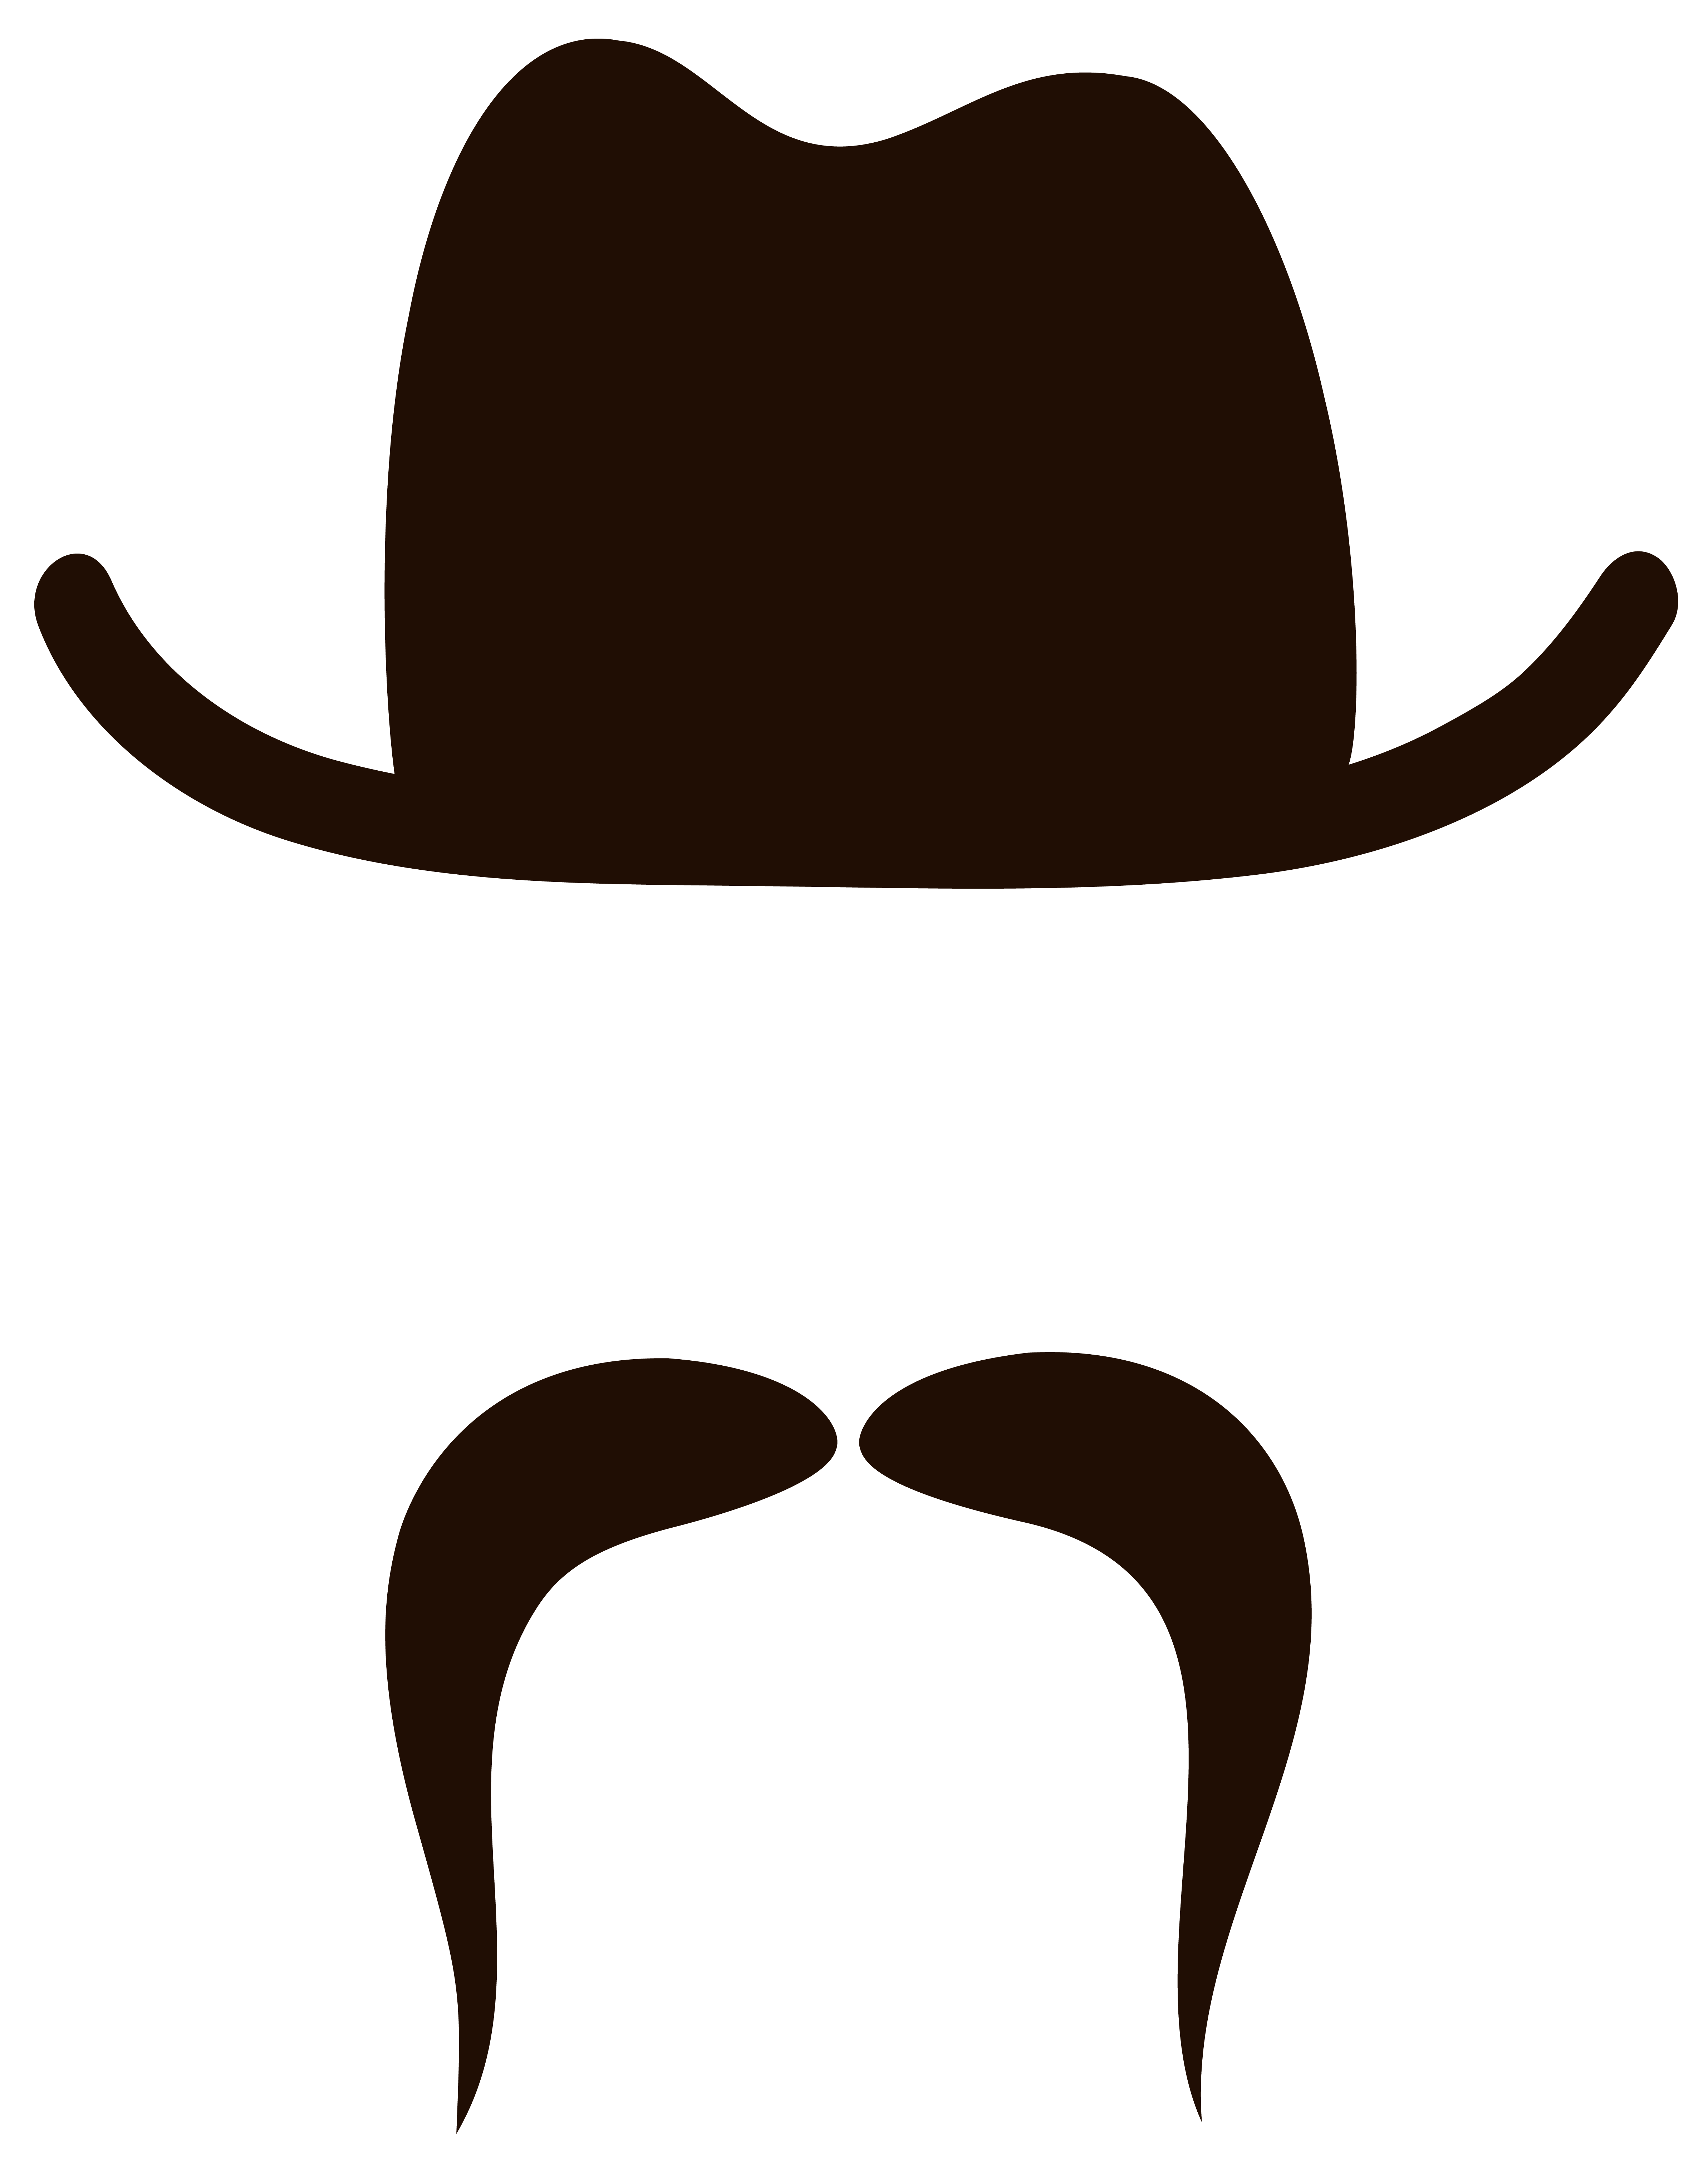 moustache and hat clipart - photo #9